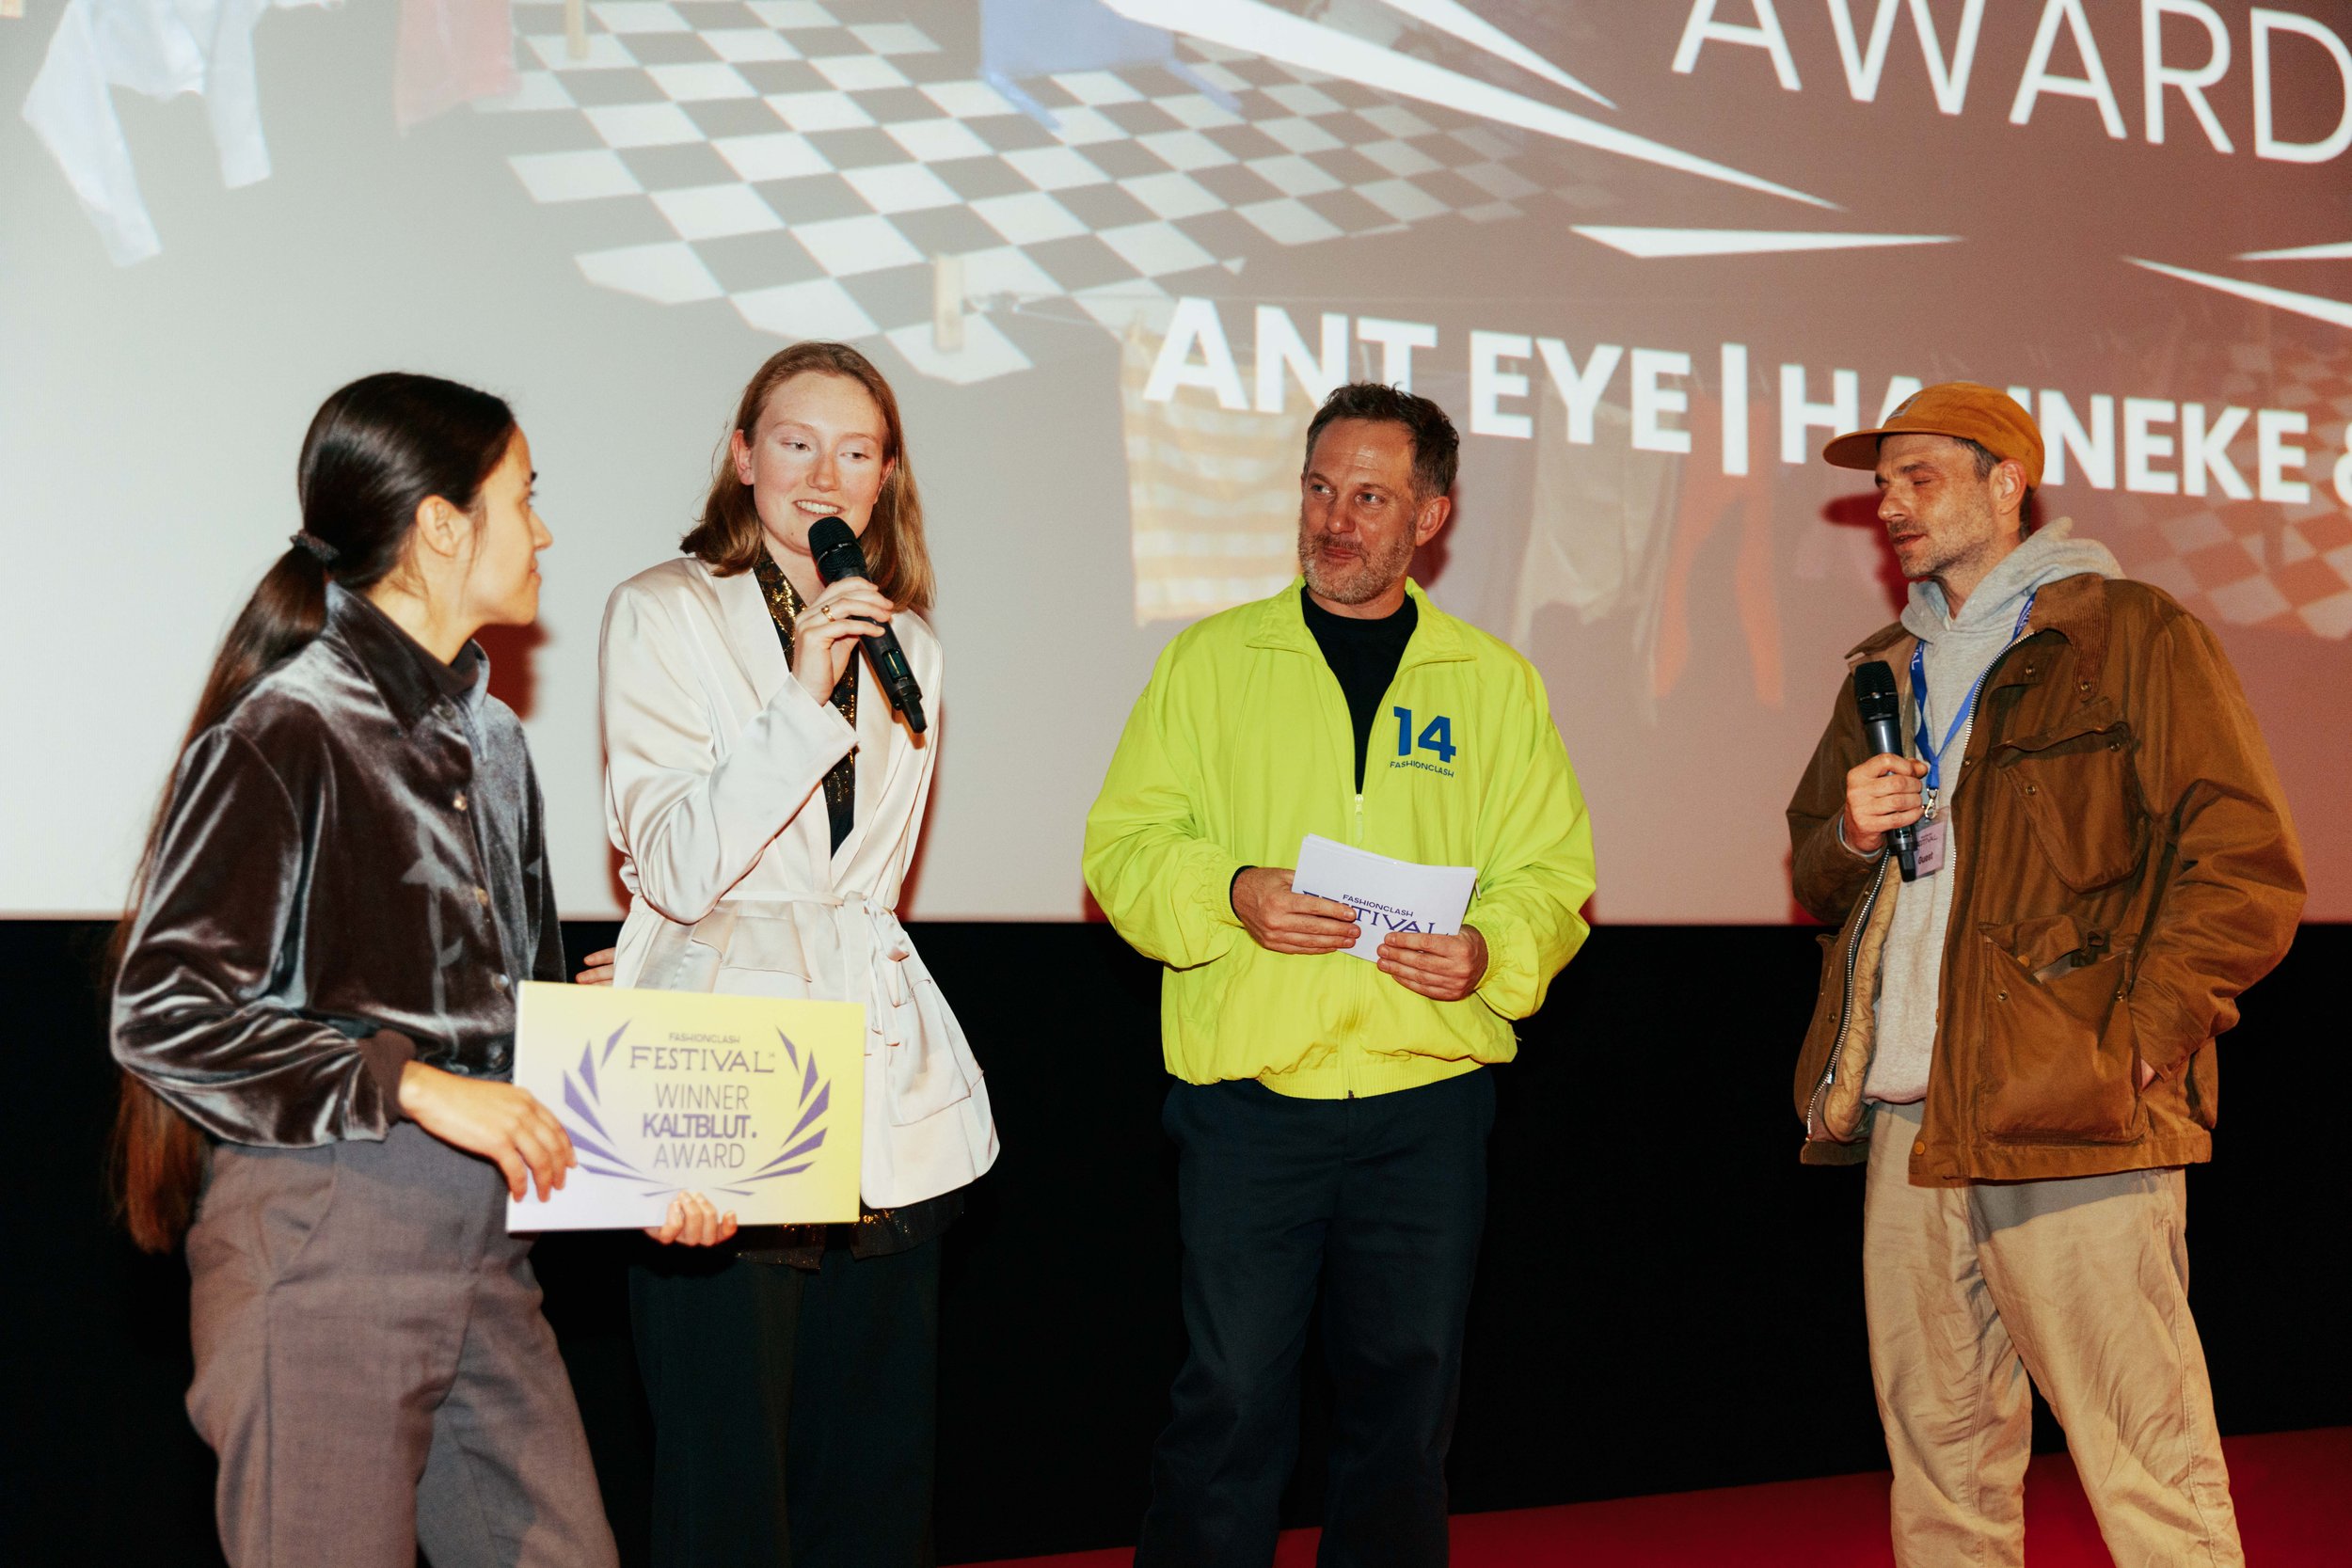 winner Kaltblut Magazine award_ANT EYE | Hanneke & Tosca._4235_www.lauraknipsael.com.jpg